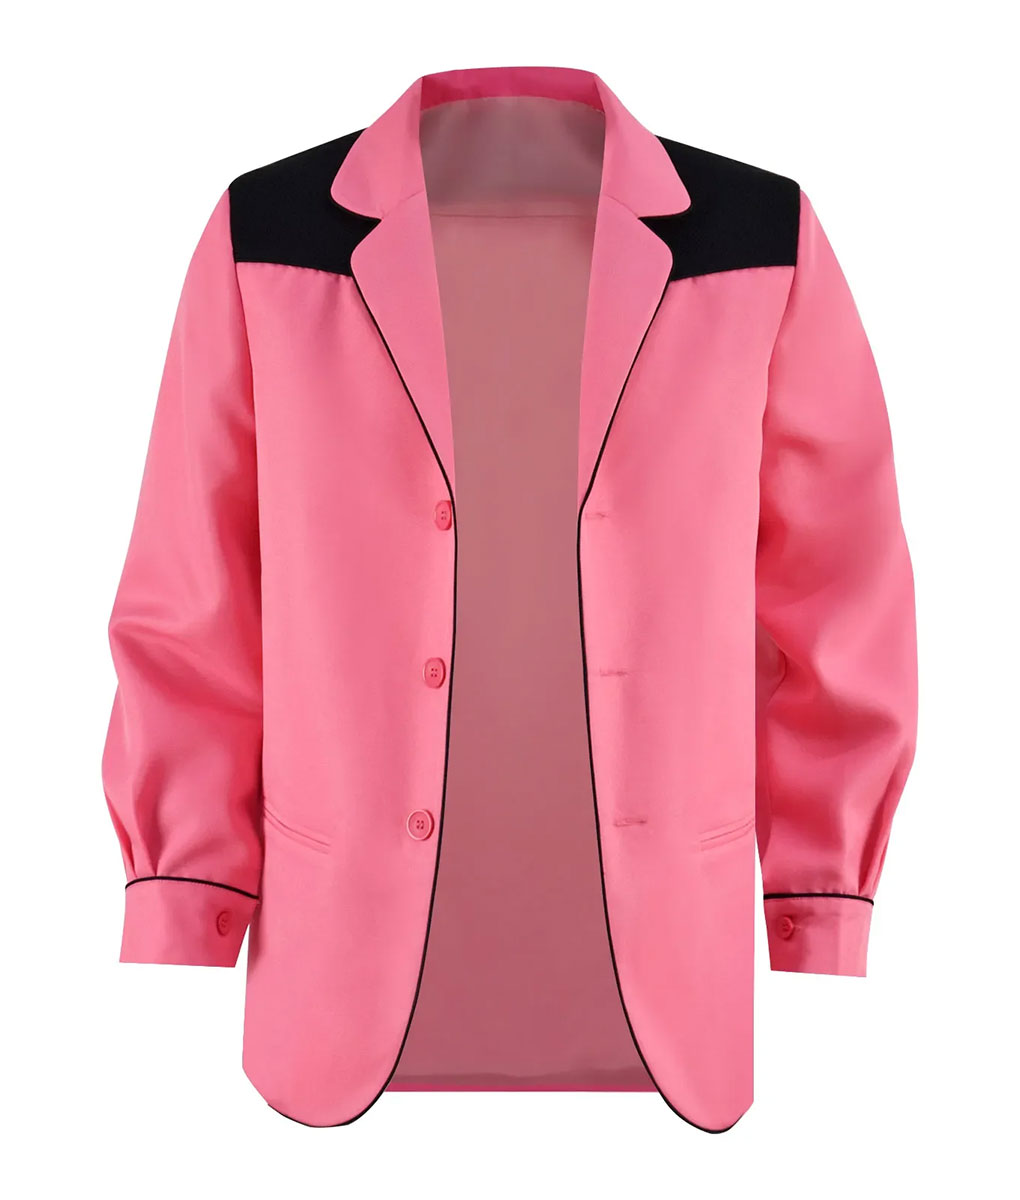 Elvis Presley Austin Butler Pink Suit (1)